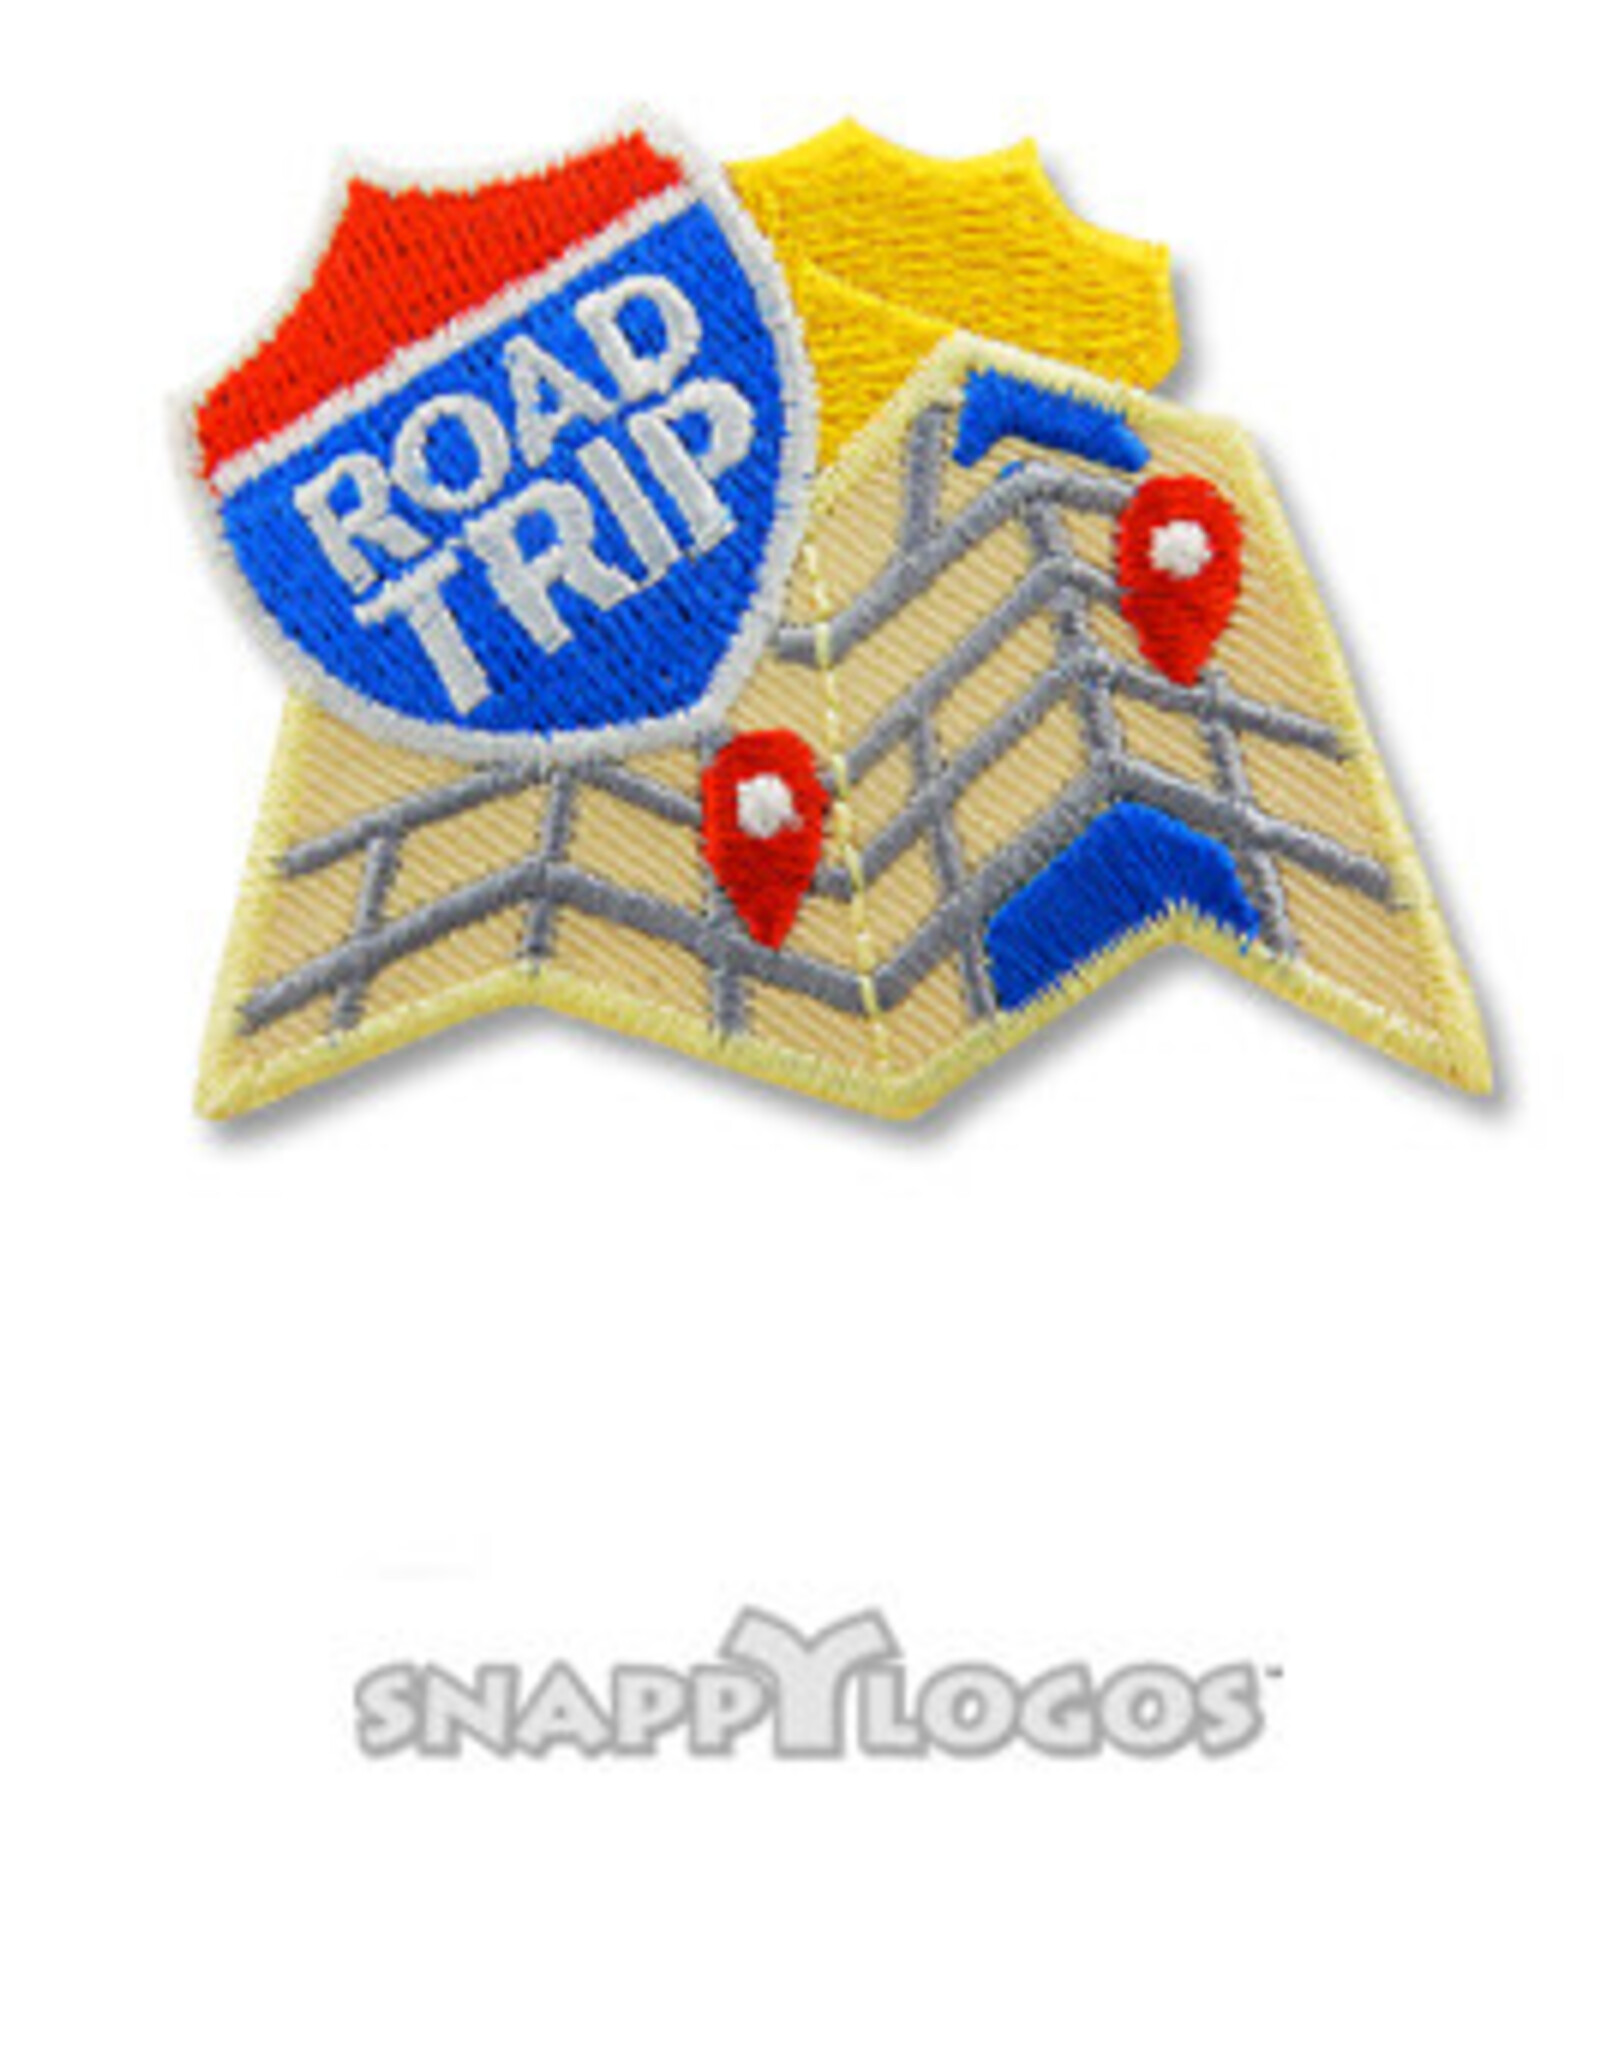 snappylogos Road Trip Fun Patch (6484)